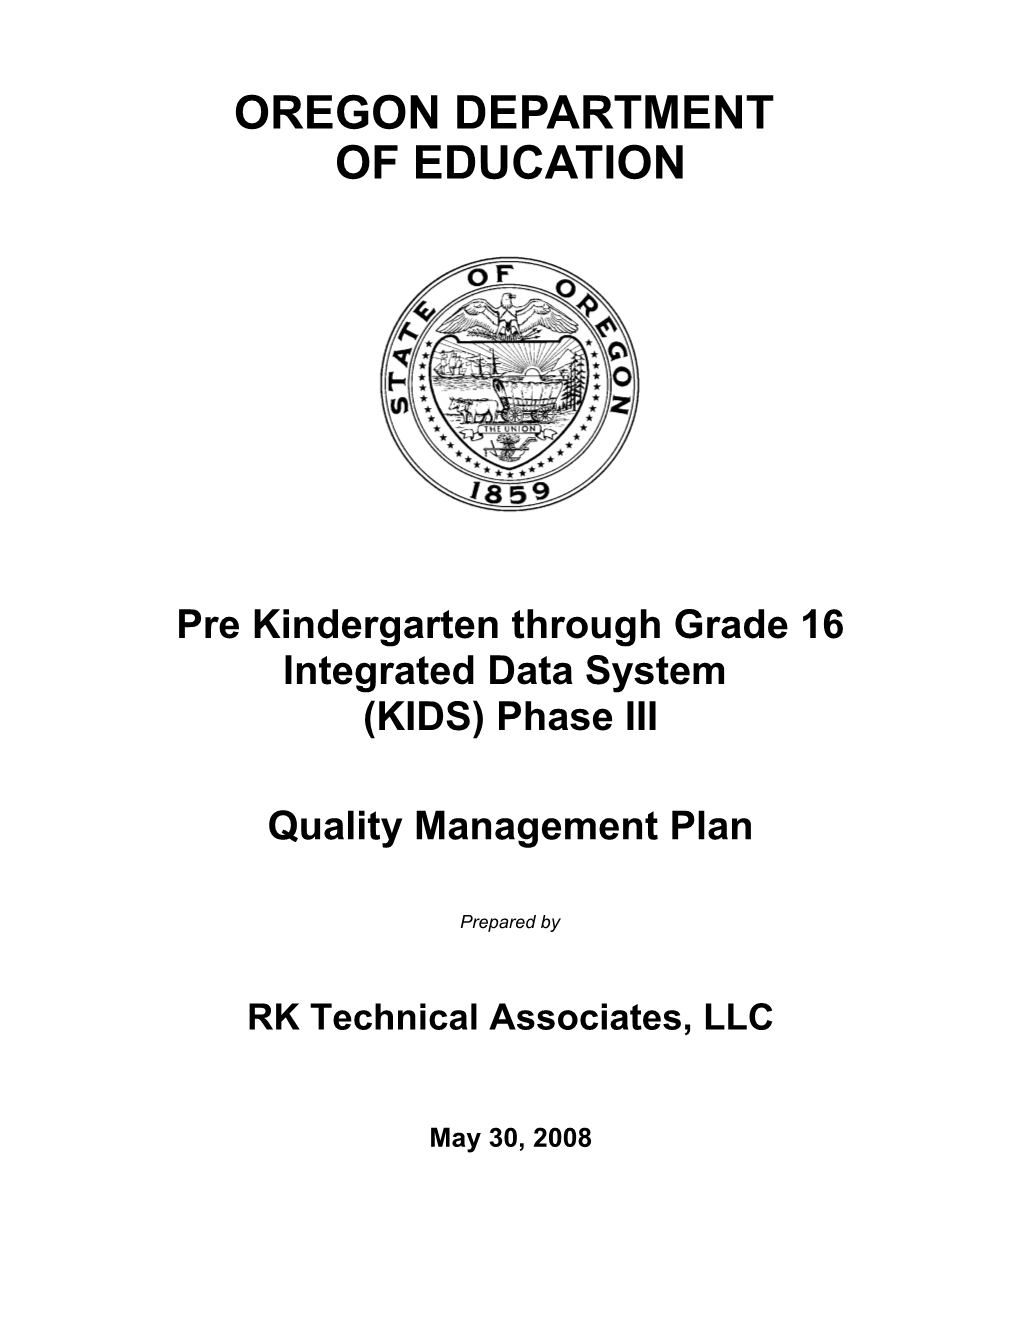 KIDS III Quality Assurance Plan May 30, 2008